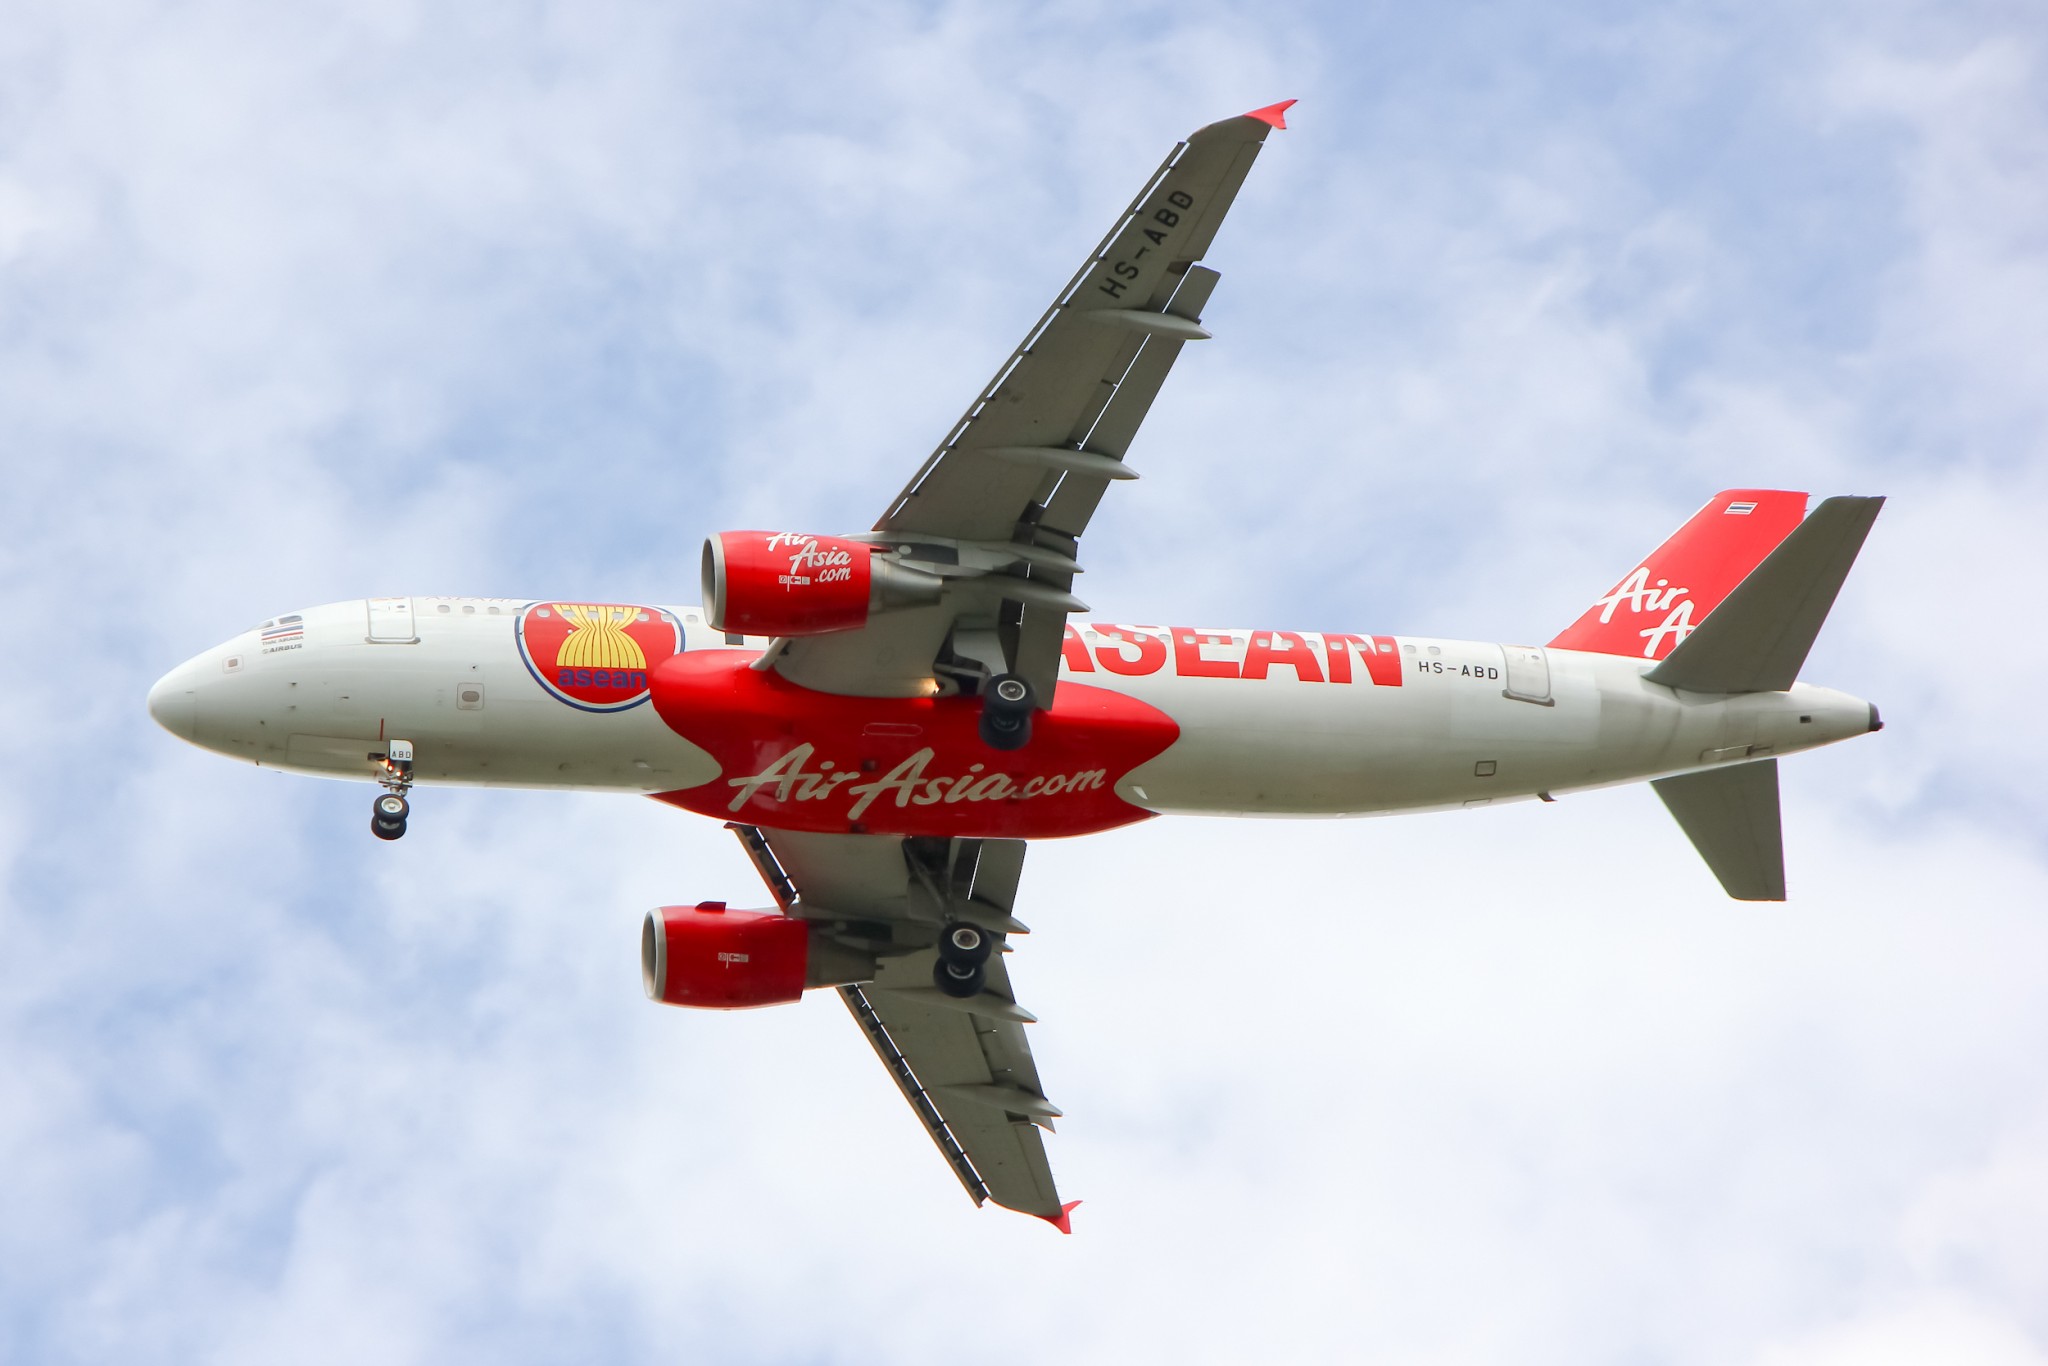 CALC to Lease One Airbus A320 Aircraft to Thai AirAsia